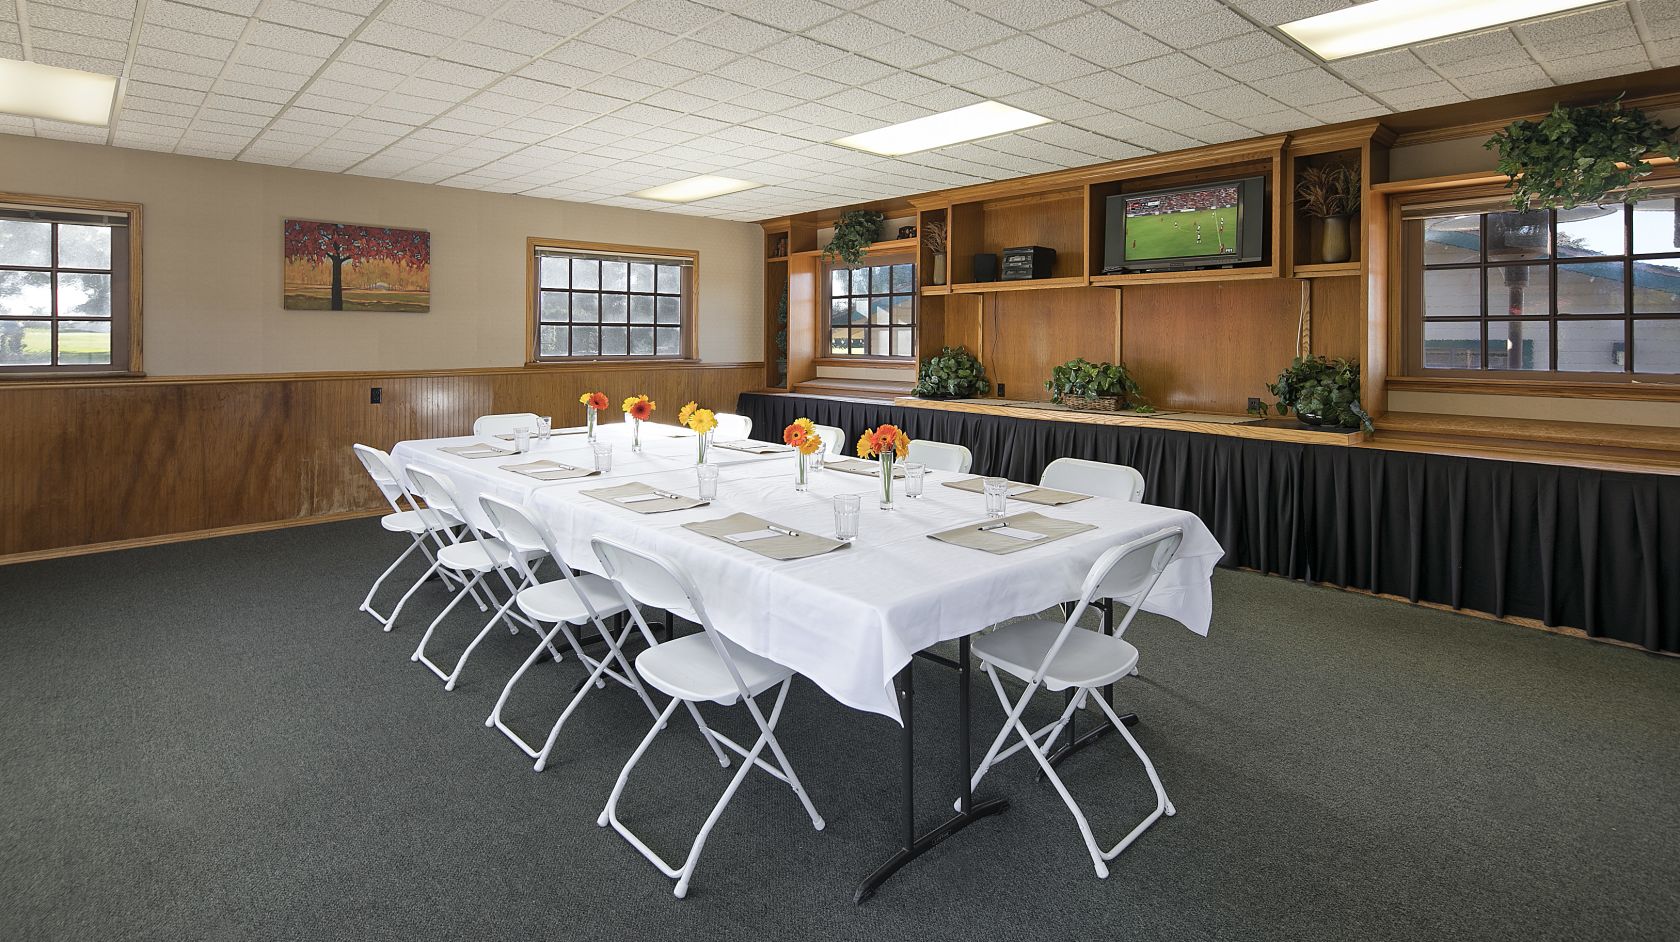  Meeting rooms in Morro Bay | Sea Pines Golf Resort in Los Osos